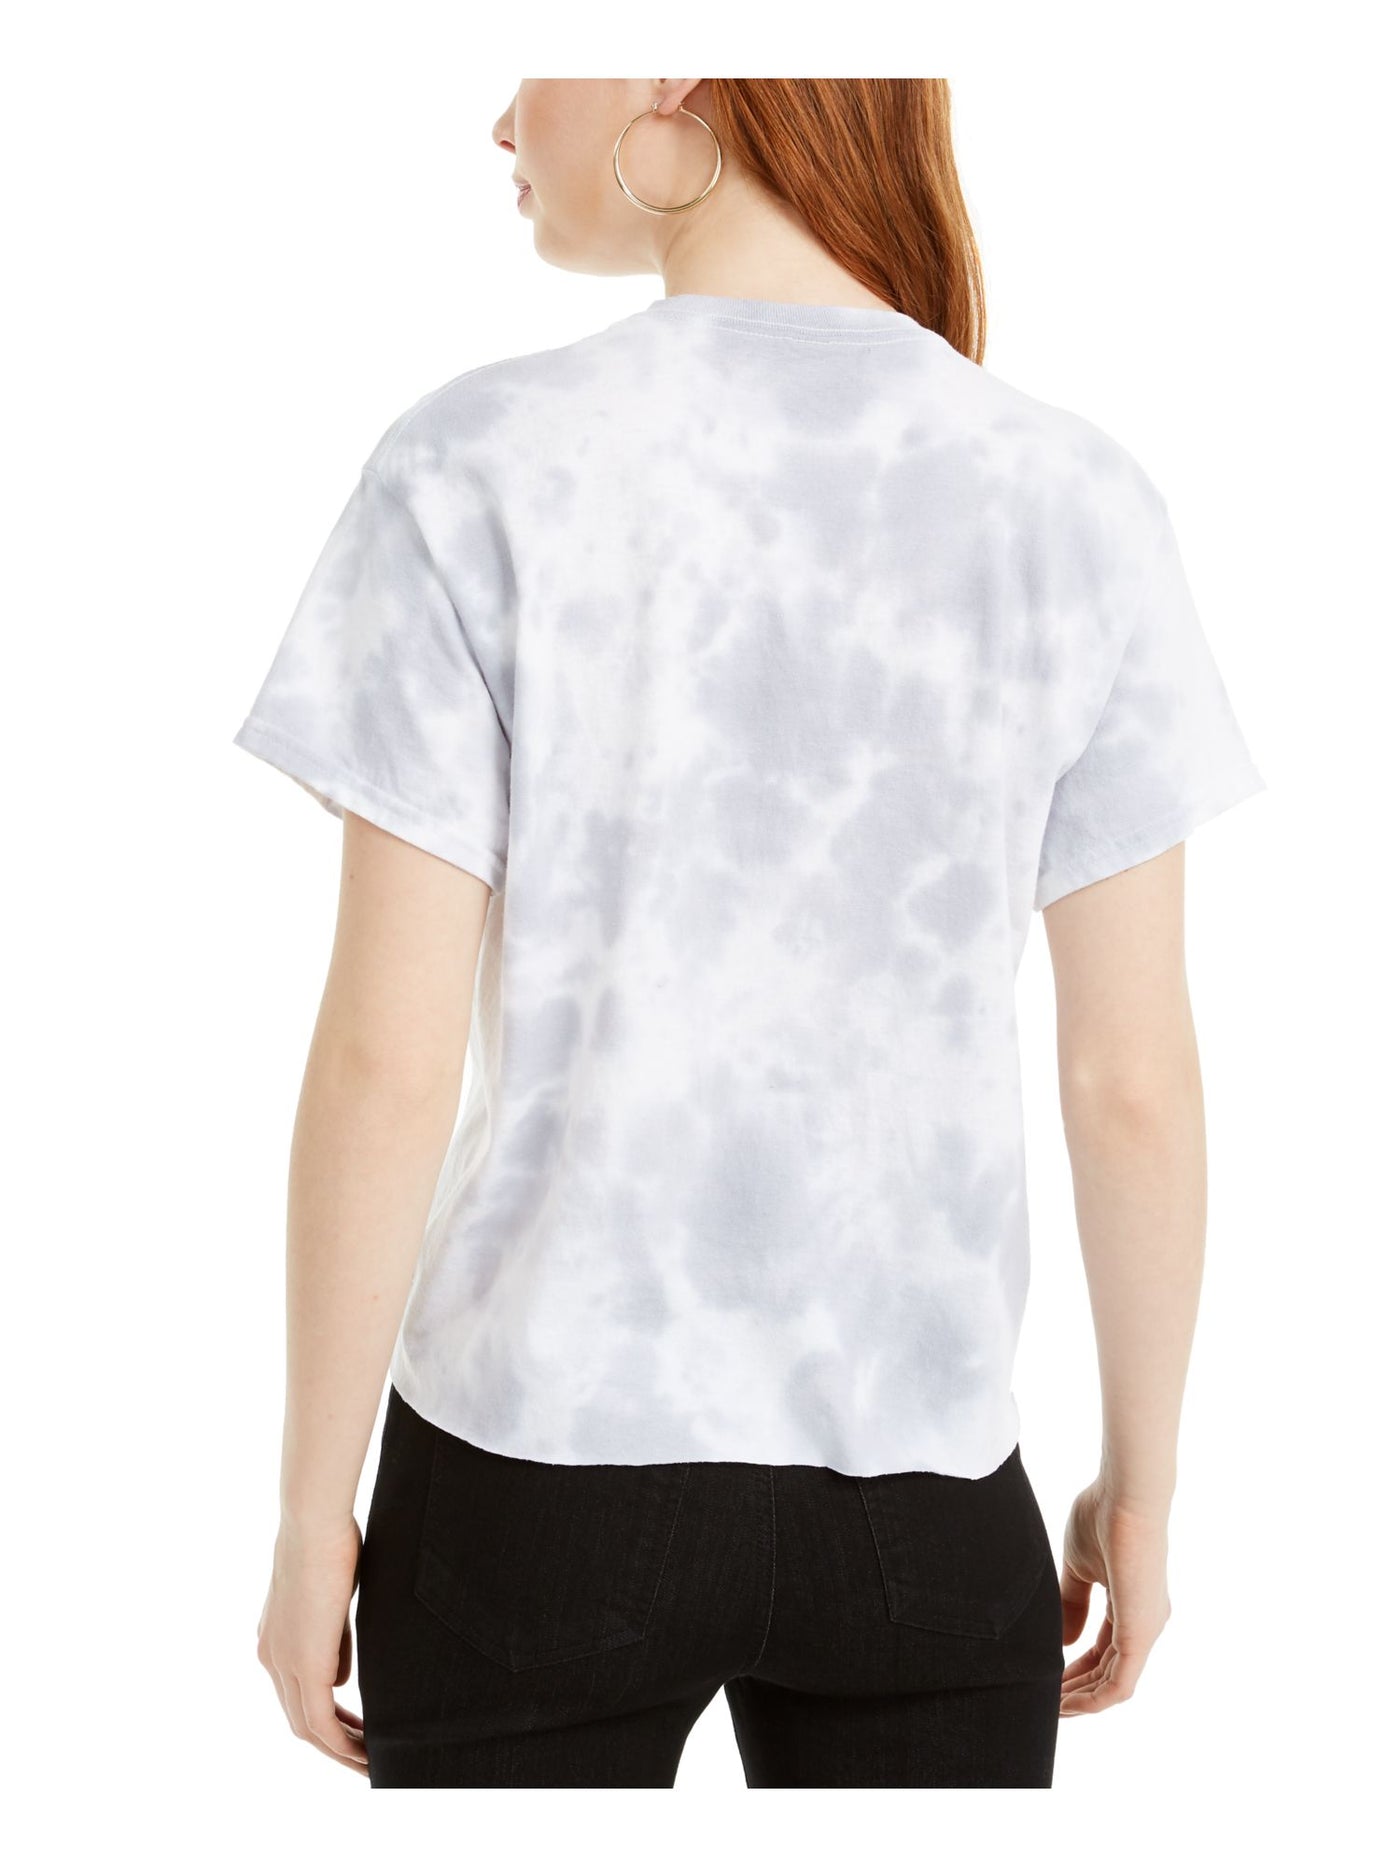 TRUE VINTAGE Womens Gray Tie Dye Short Sleeve Crew Neck T-Shirt S